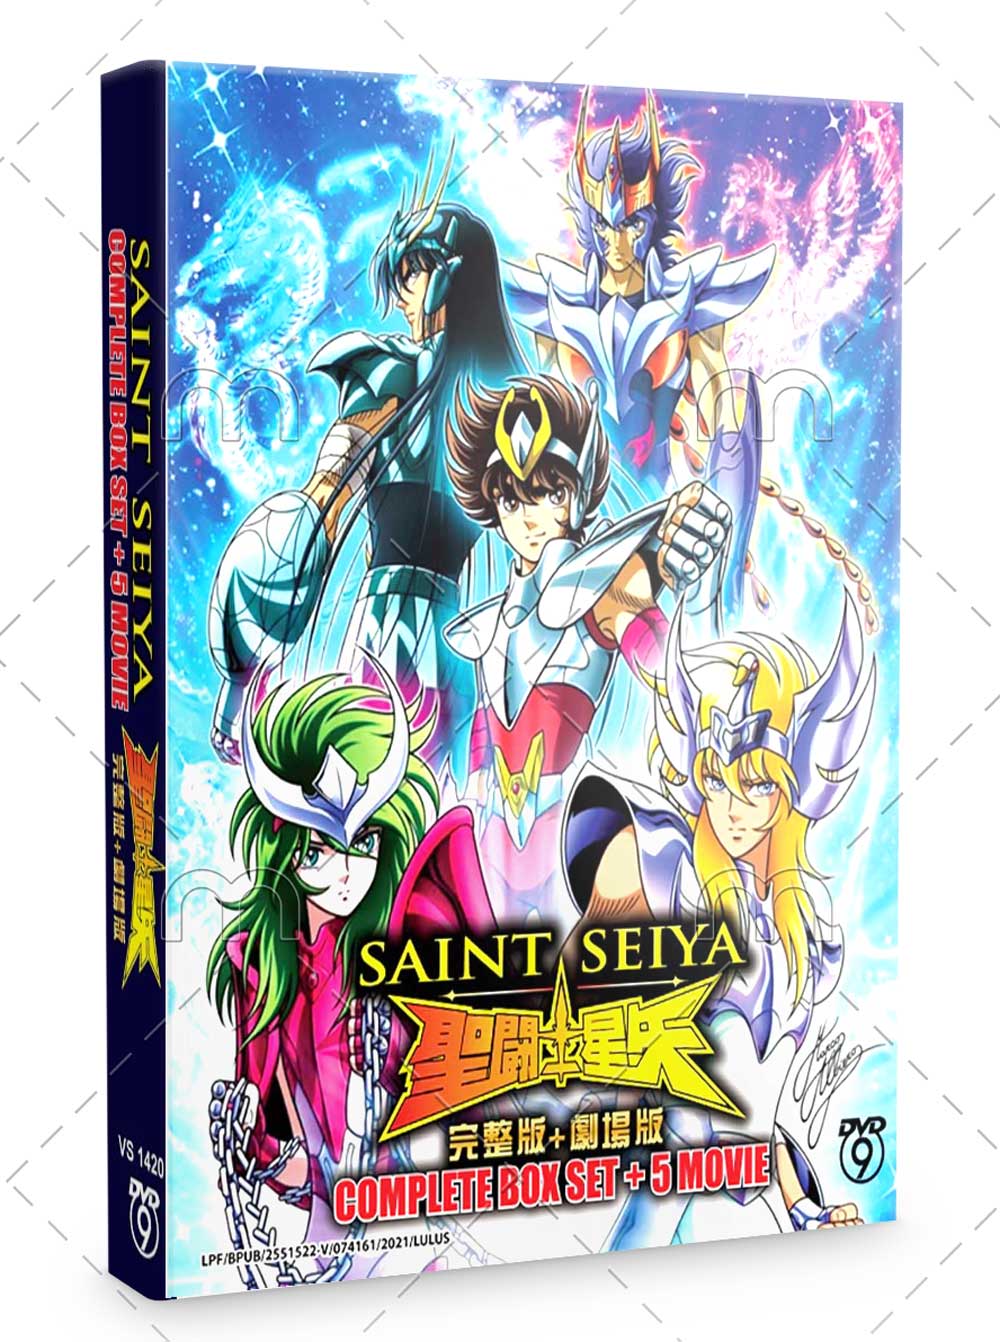 Saint Seiya Box Set + 5 Movies (DVD) (1986-2010) Anime